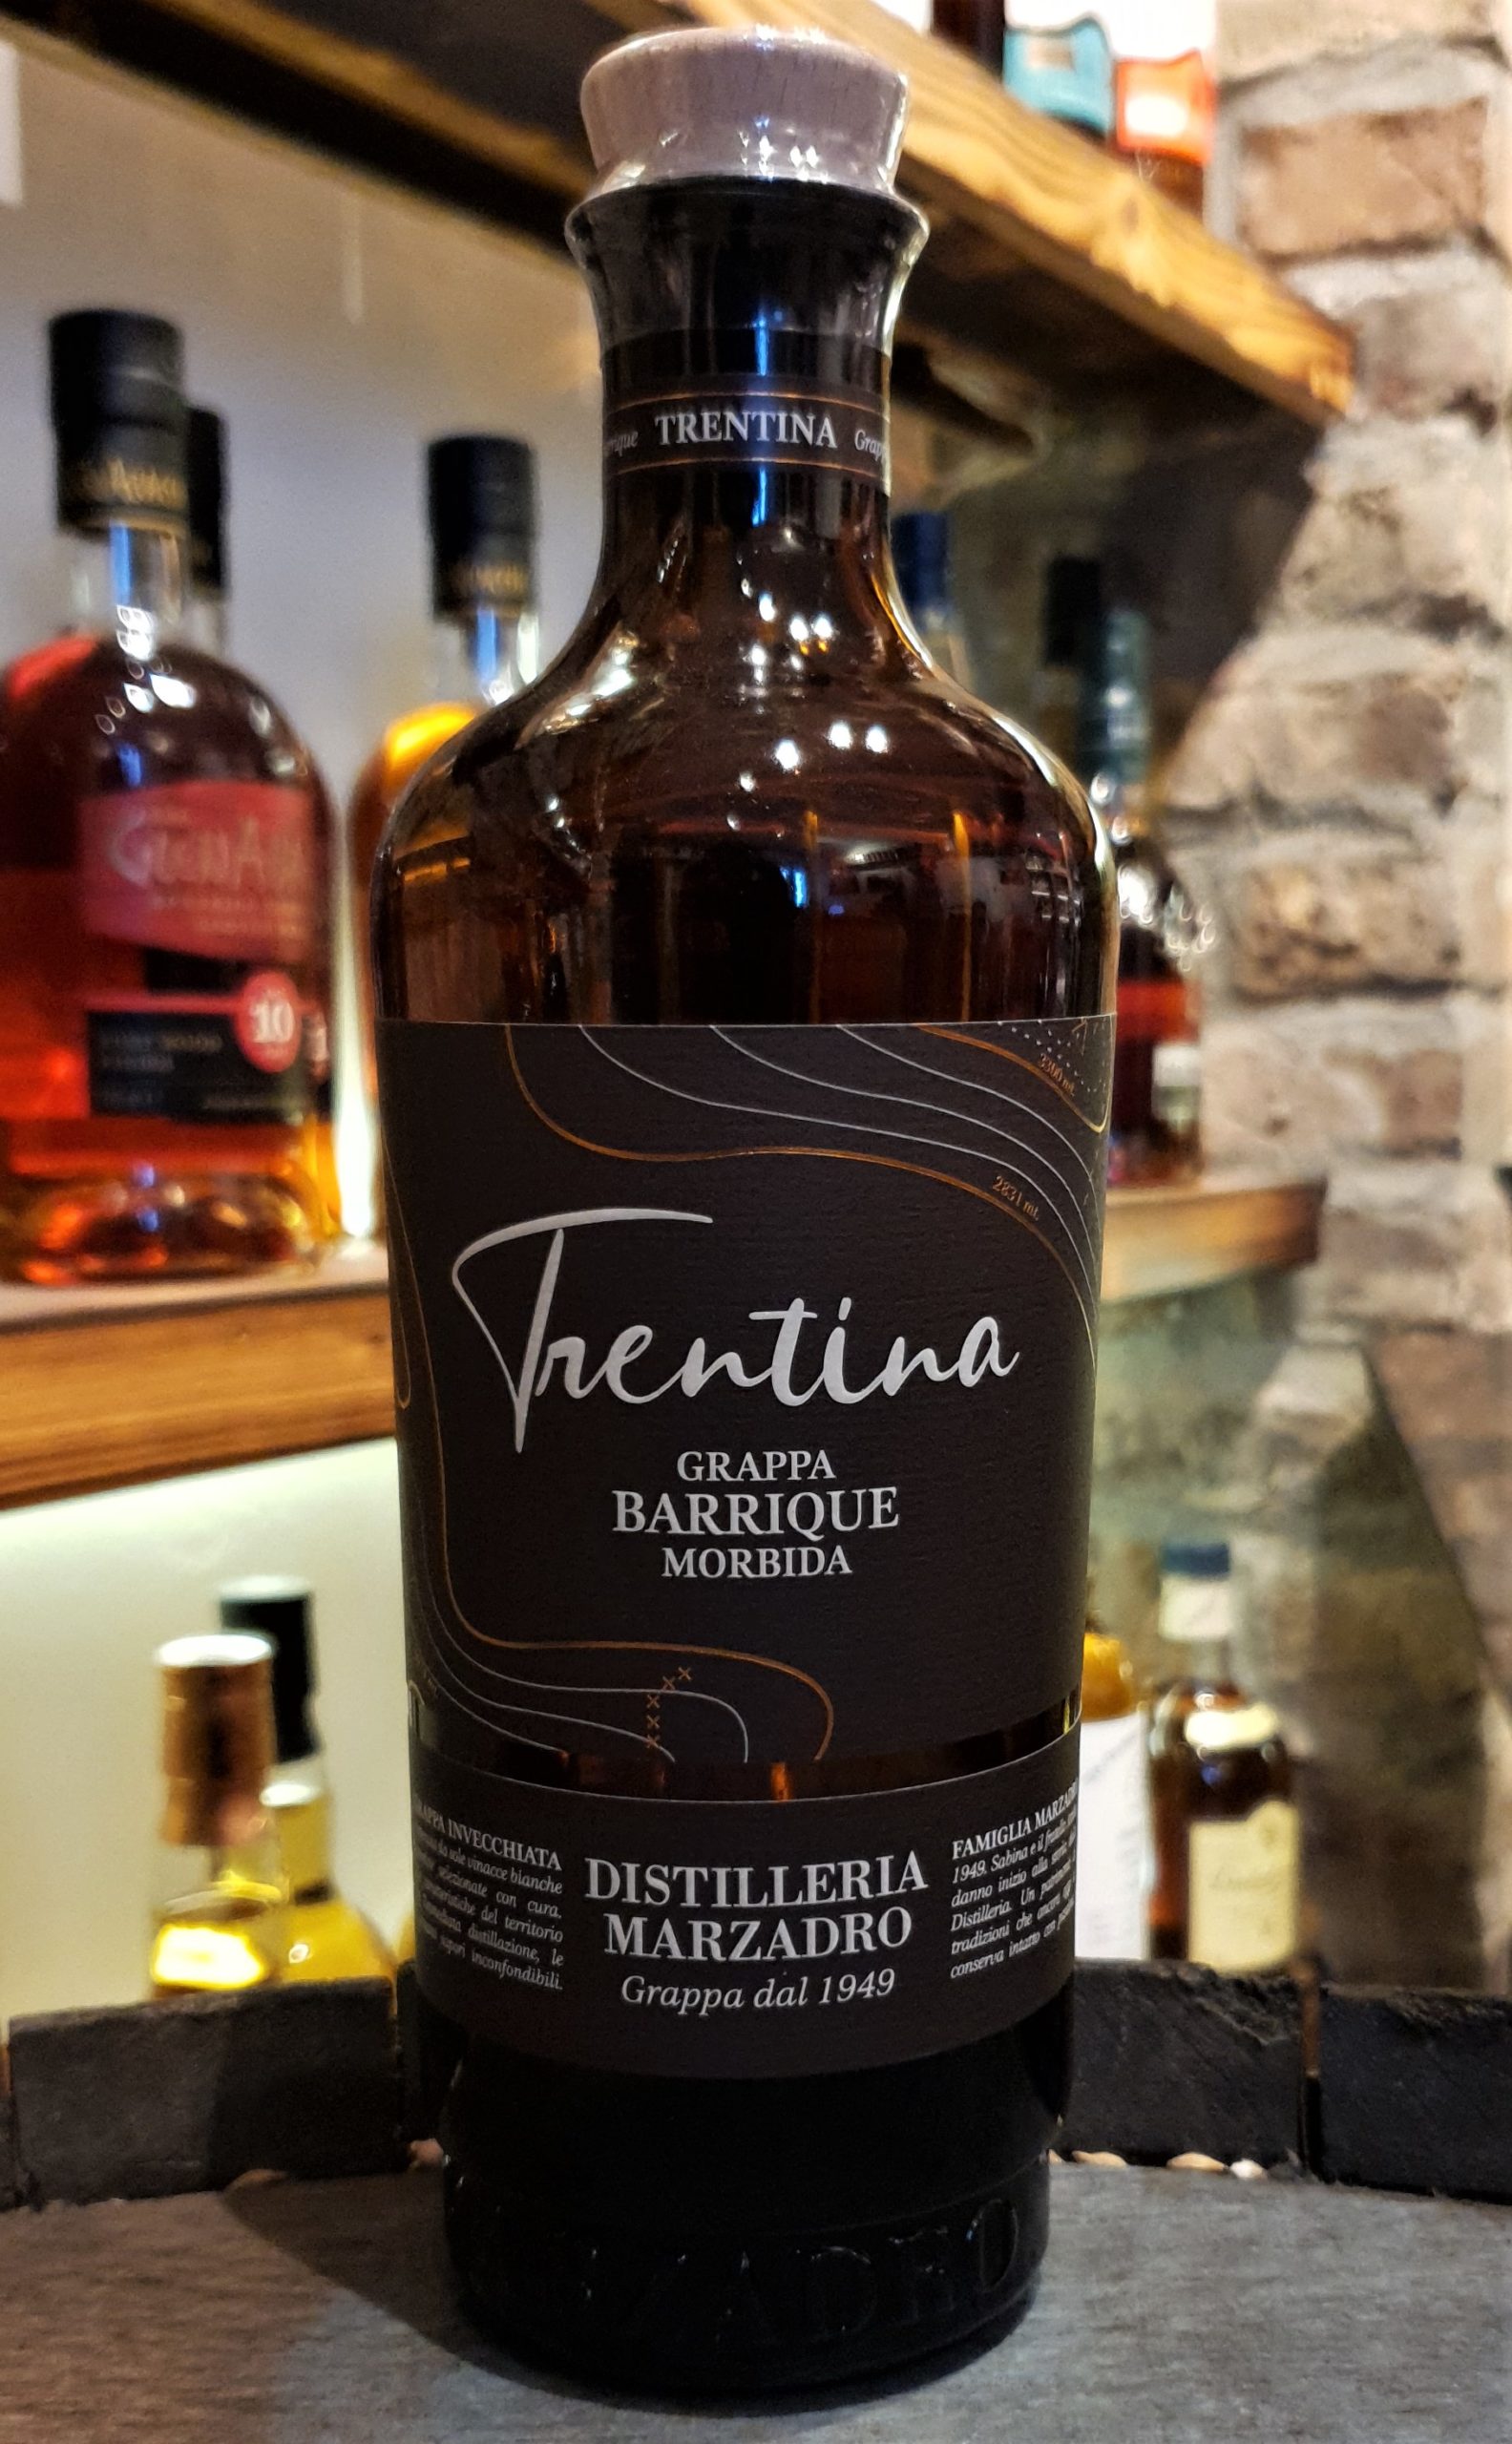 – Postert Spirituosenhandel – 0,7l und La rechtsrheinisch – Grappa – – Whisky Morbida Whisky, Trentina 41% Rum Köln